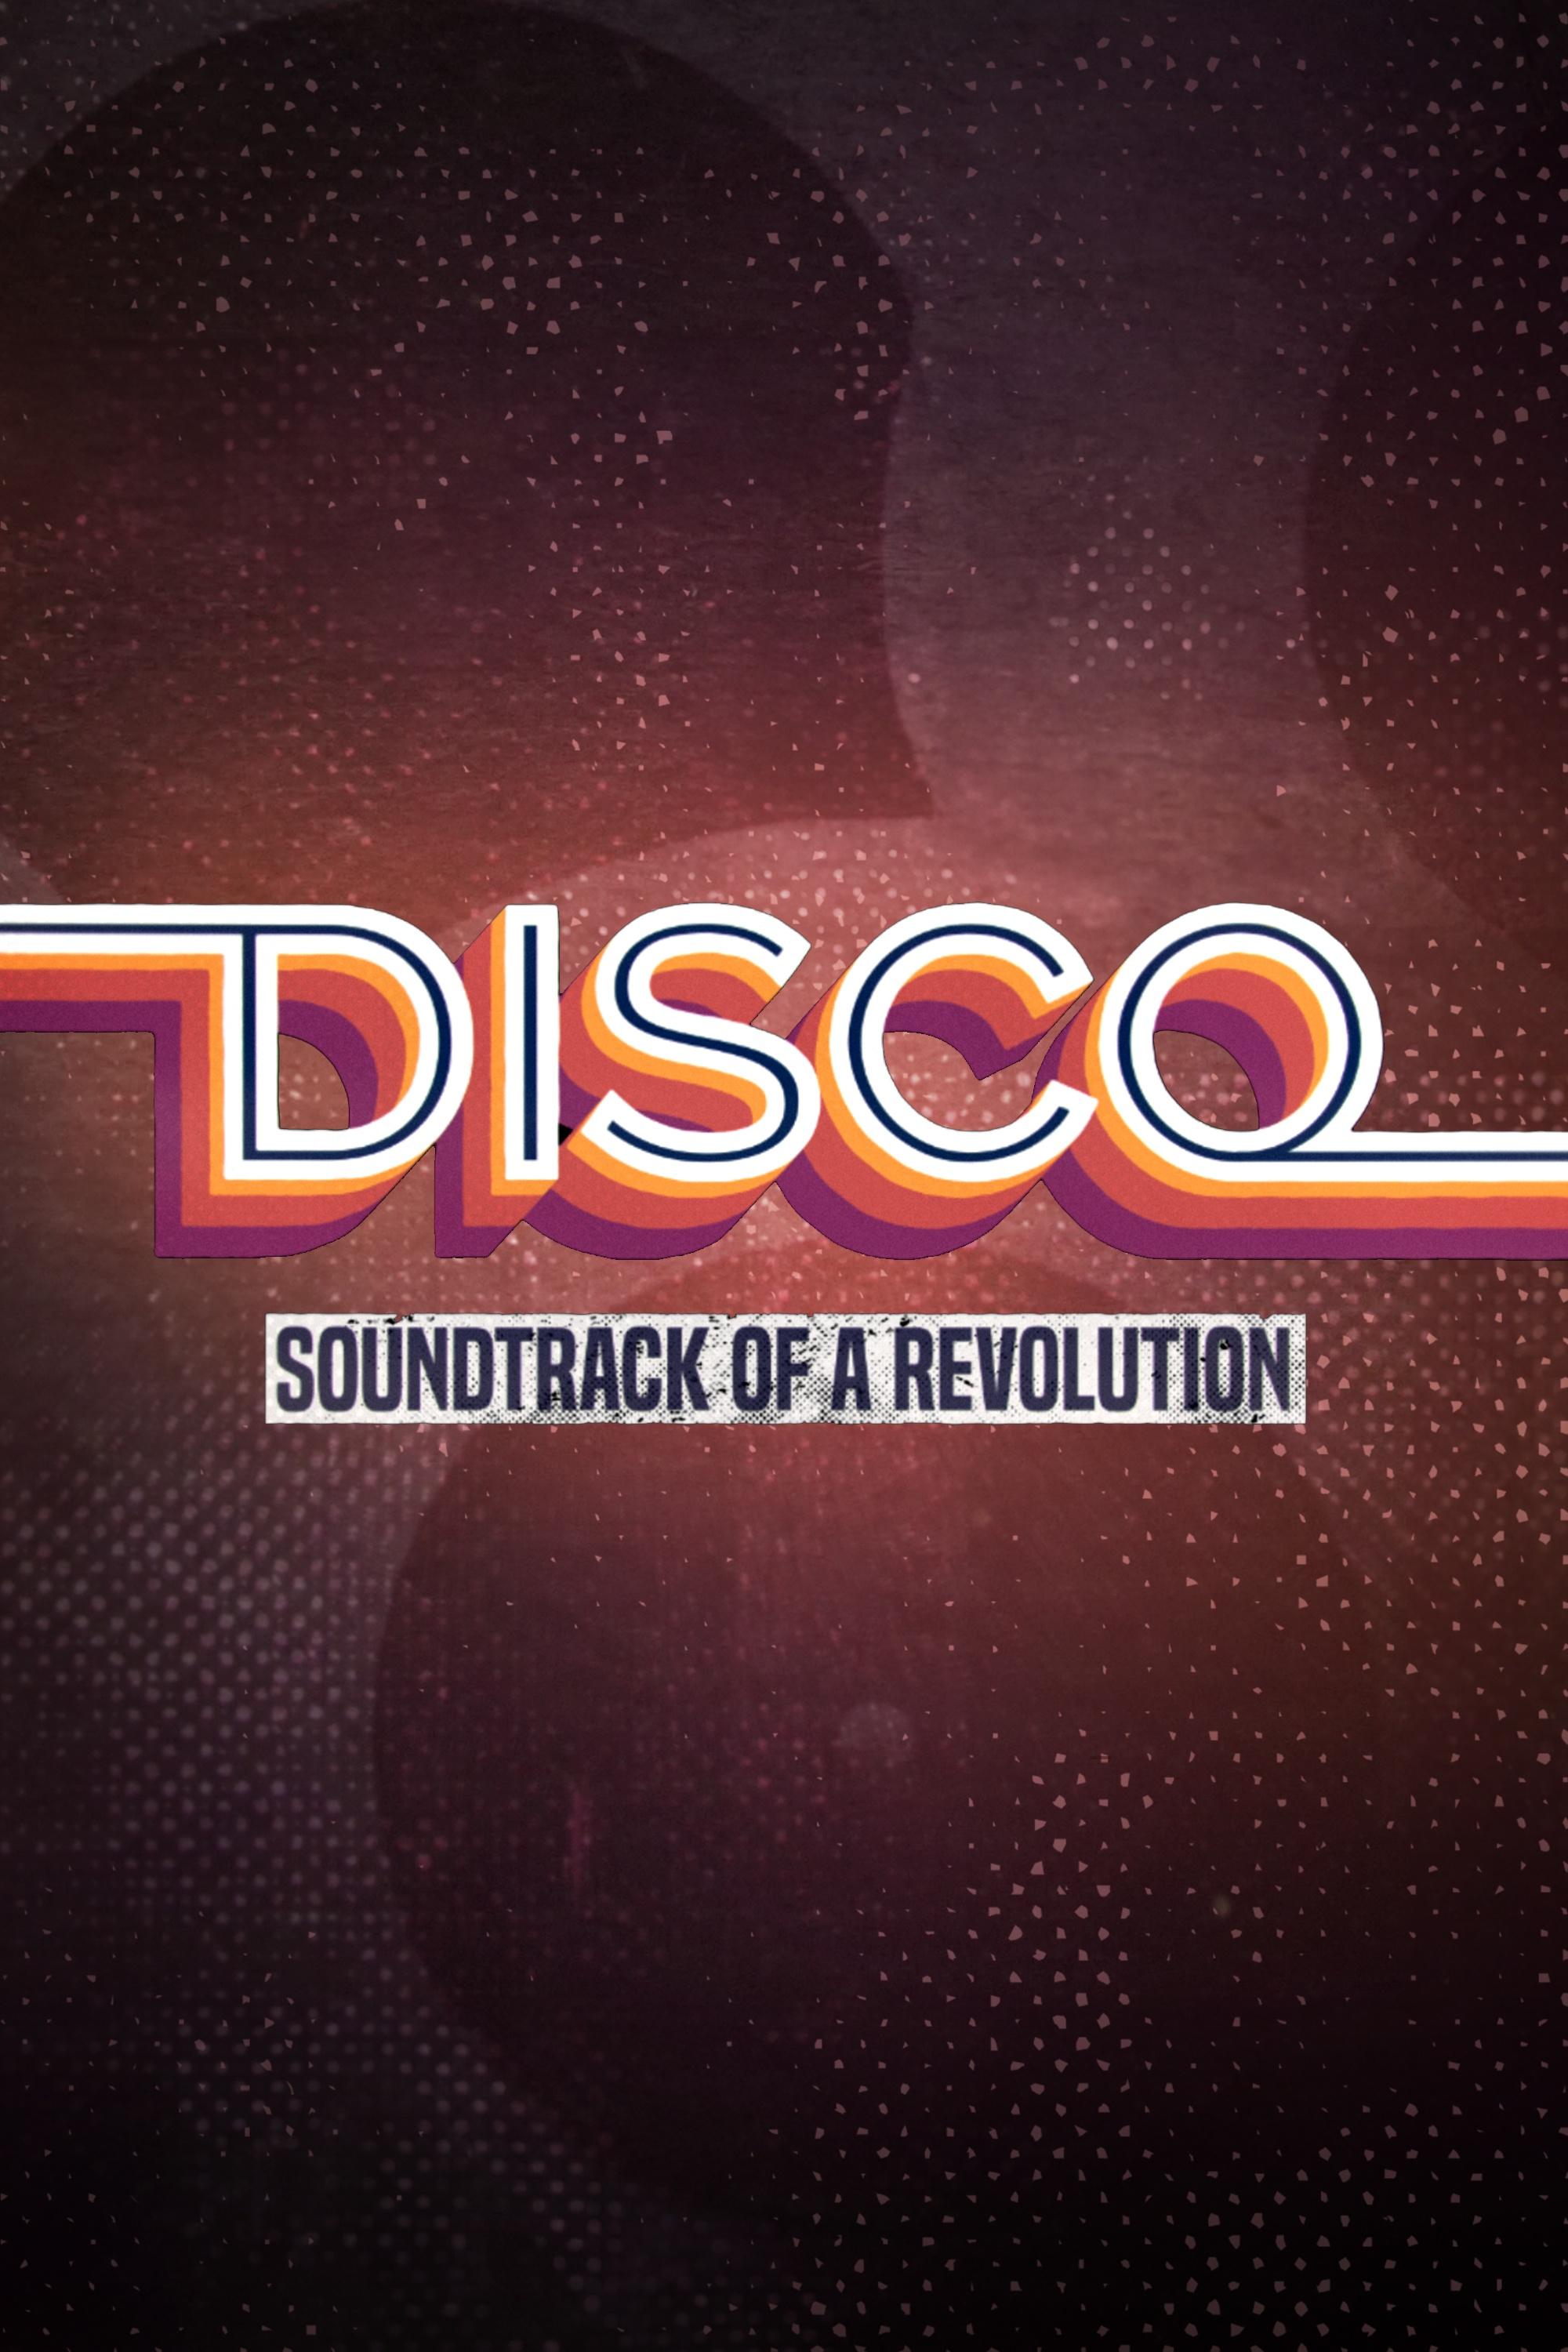 Disco: Soundtrack of a Revolution show's poster